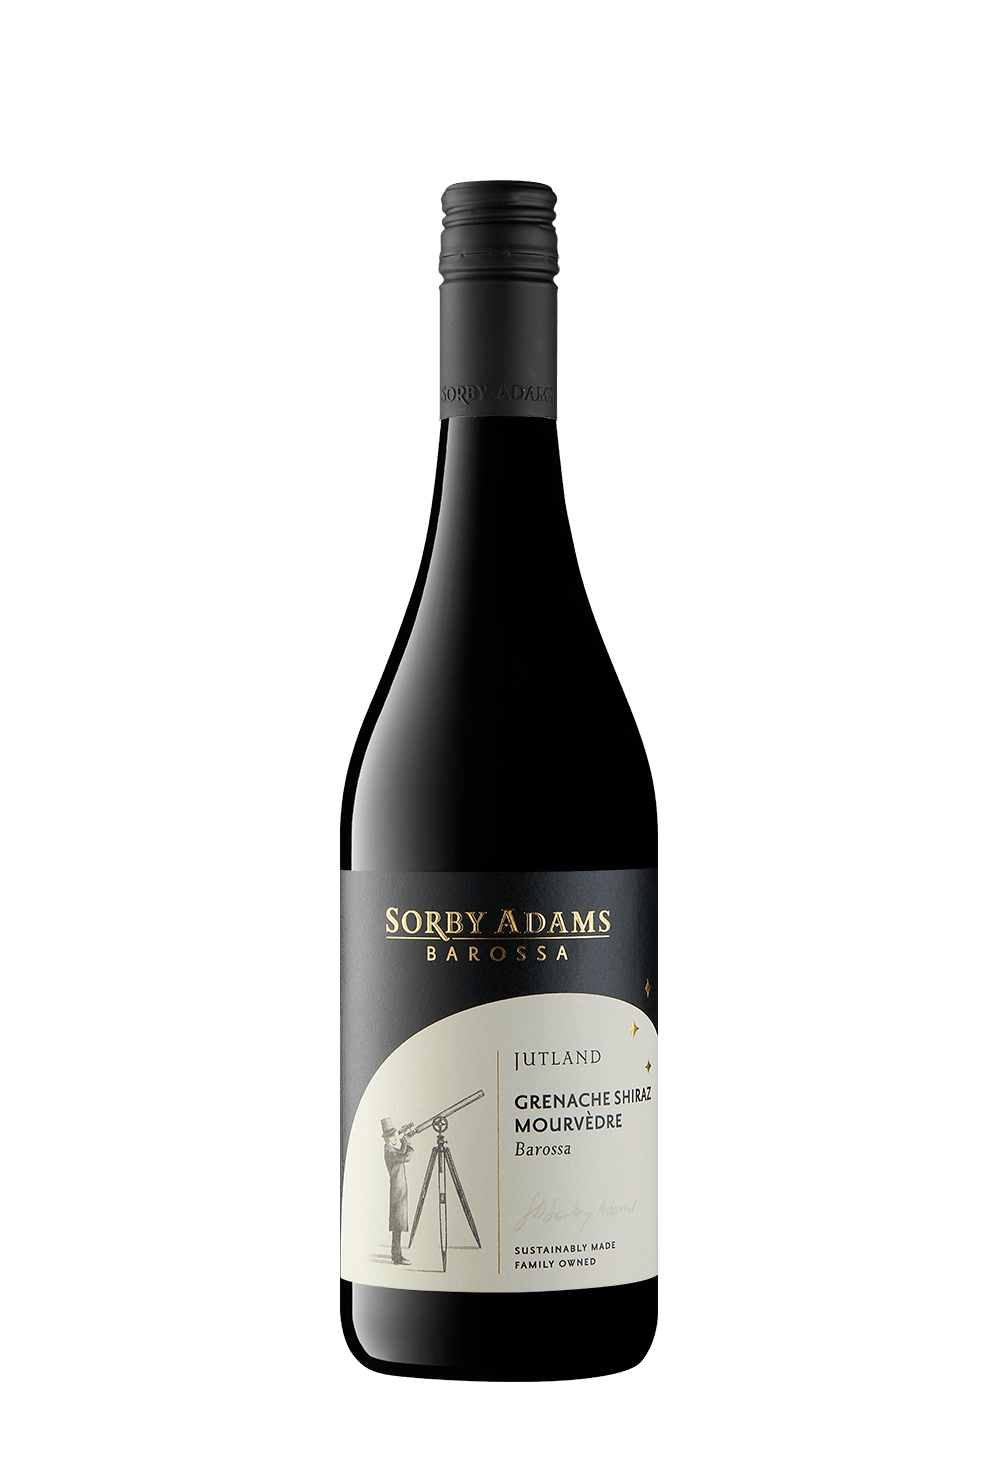 2022 Jutland Grenache (GSM) Adams Sorby Barossa Wines Mourvedre – Shiraz